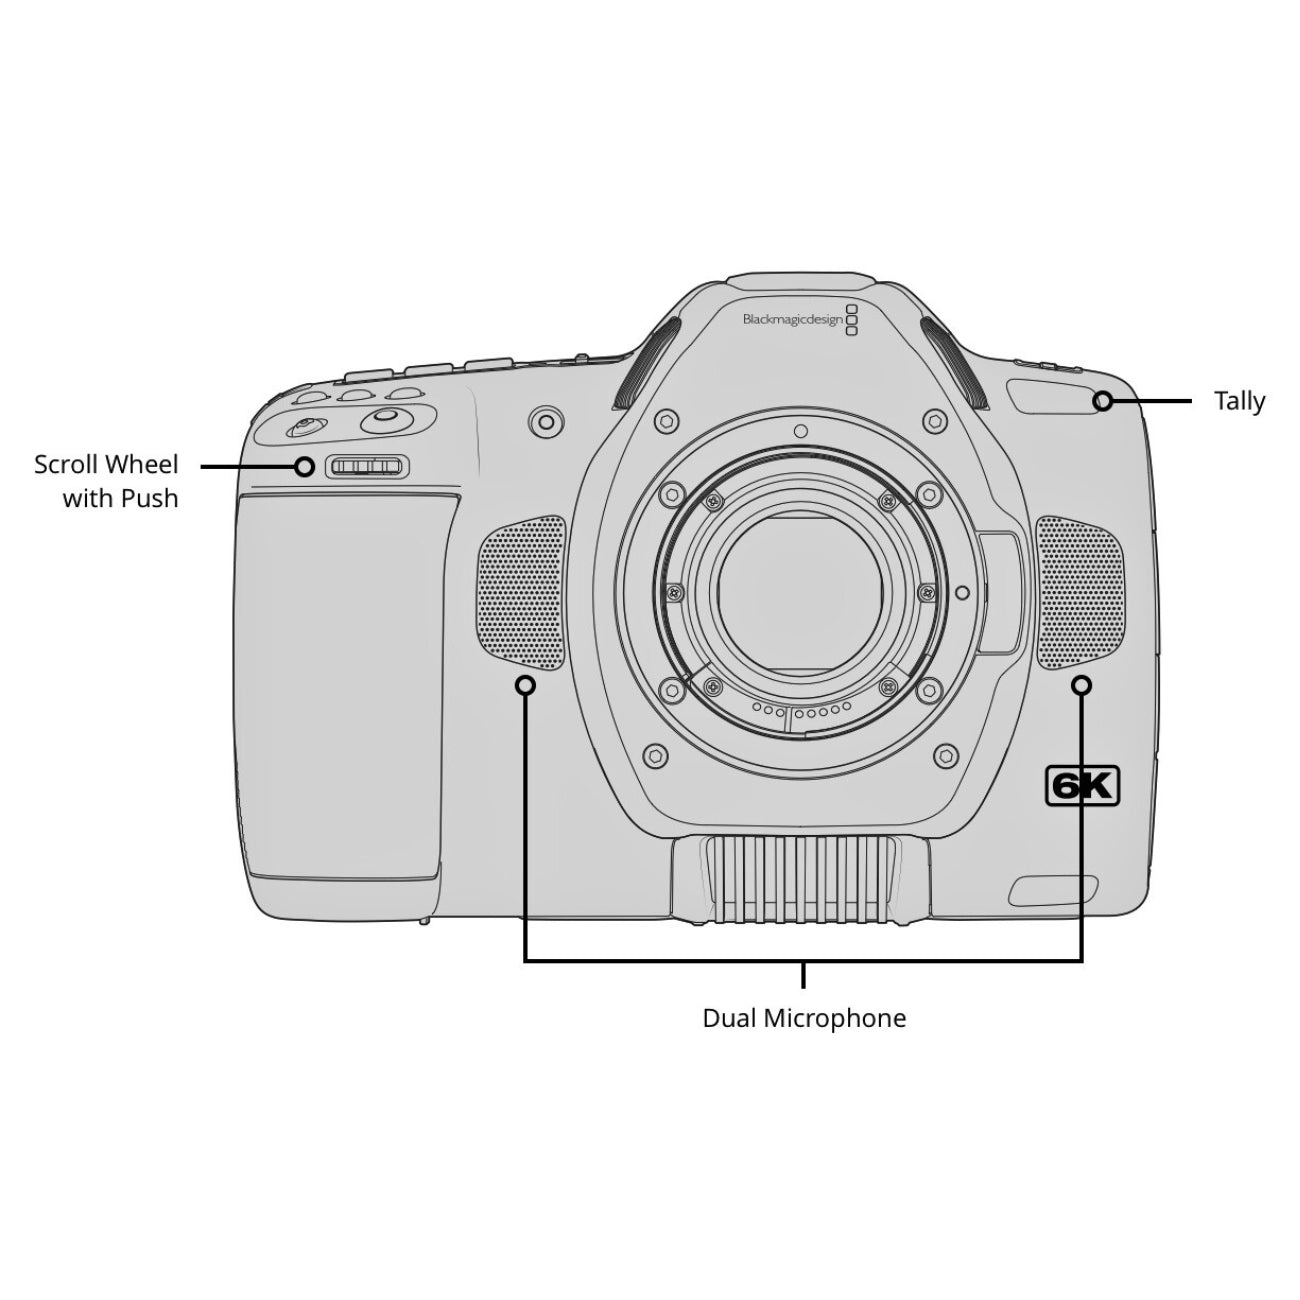 Blackmagic Design Pocket Cinema Camera 6K Pro with DaVinci Resolve Studio - Sketch